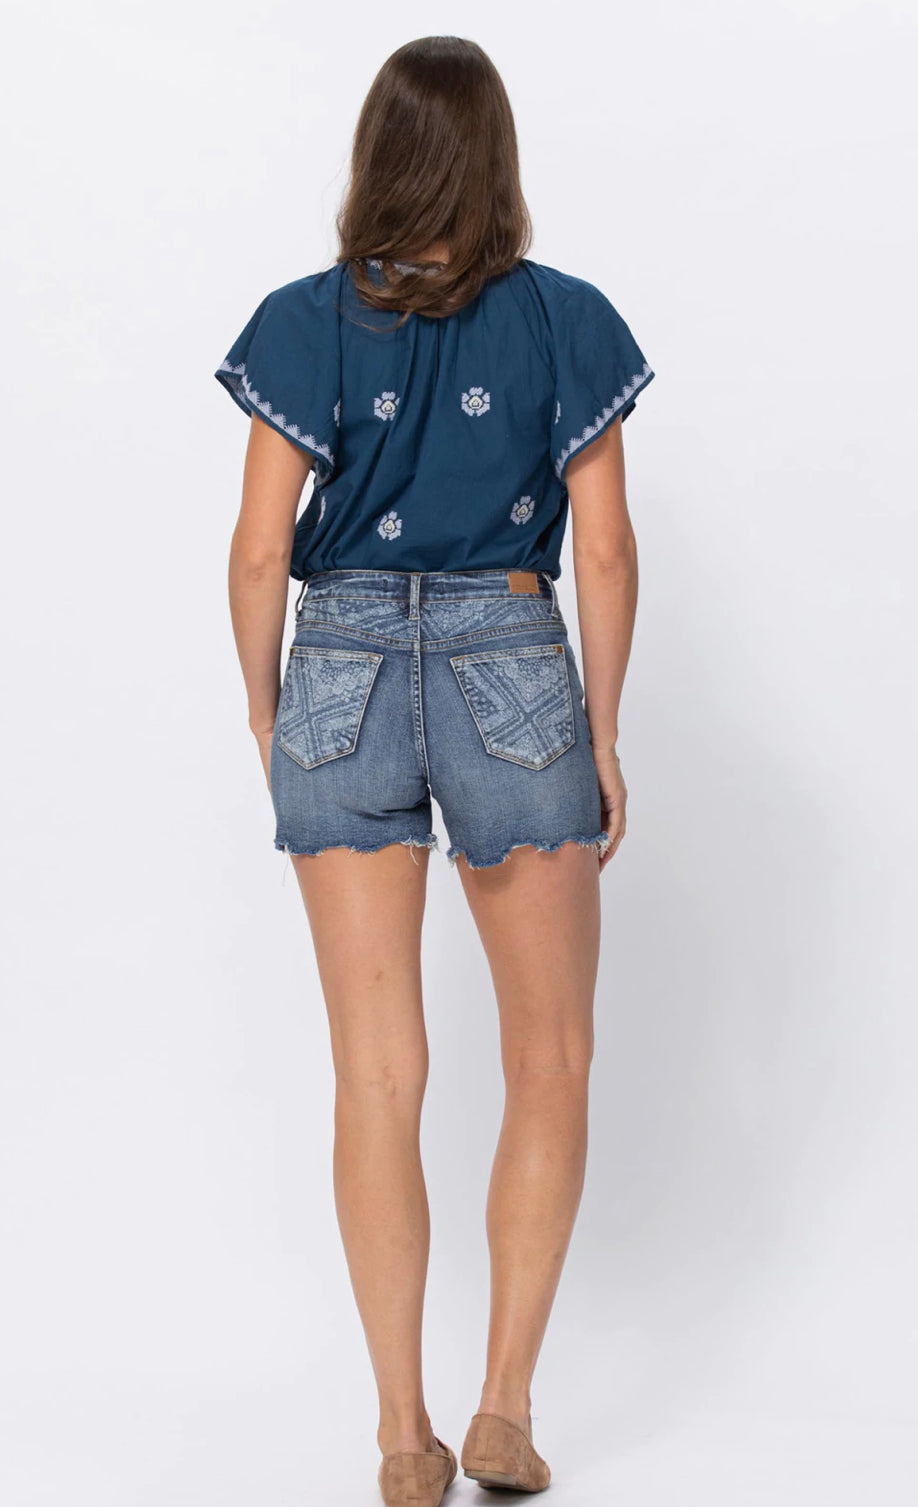 Judy Blue Trina Midrise Shorts, Hot Pink – Sew Southern Designs